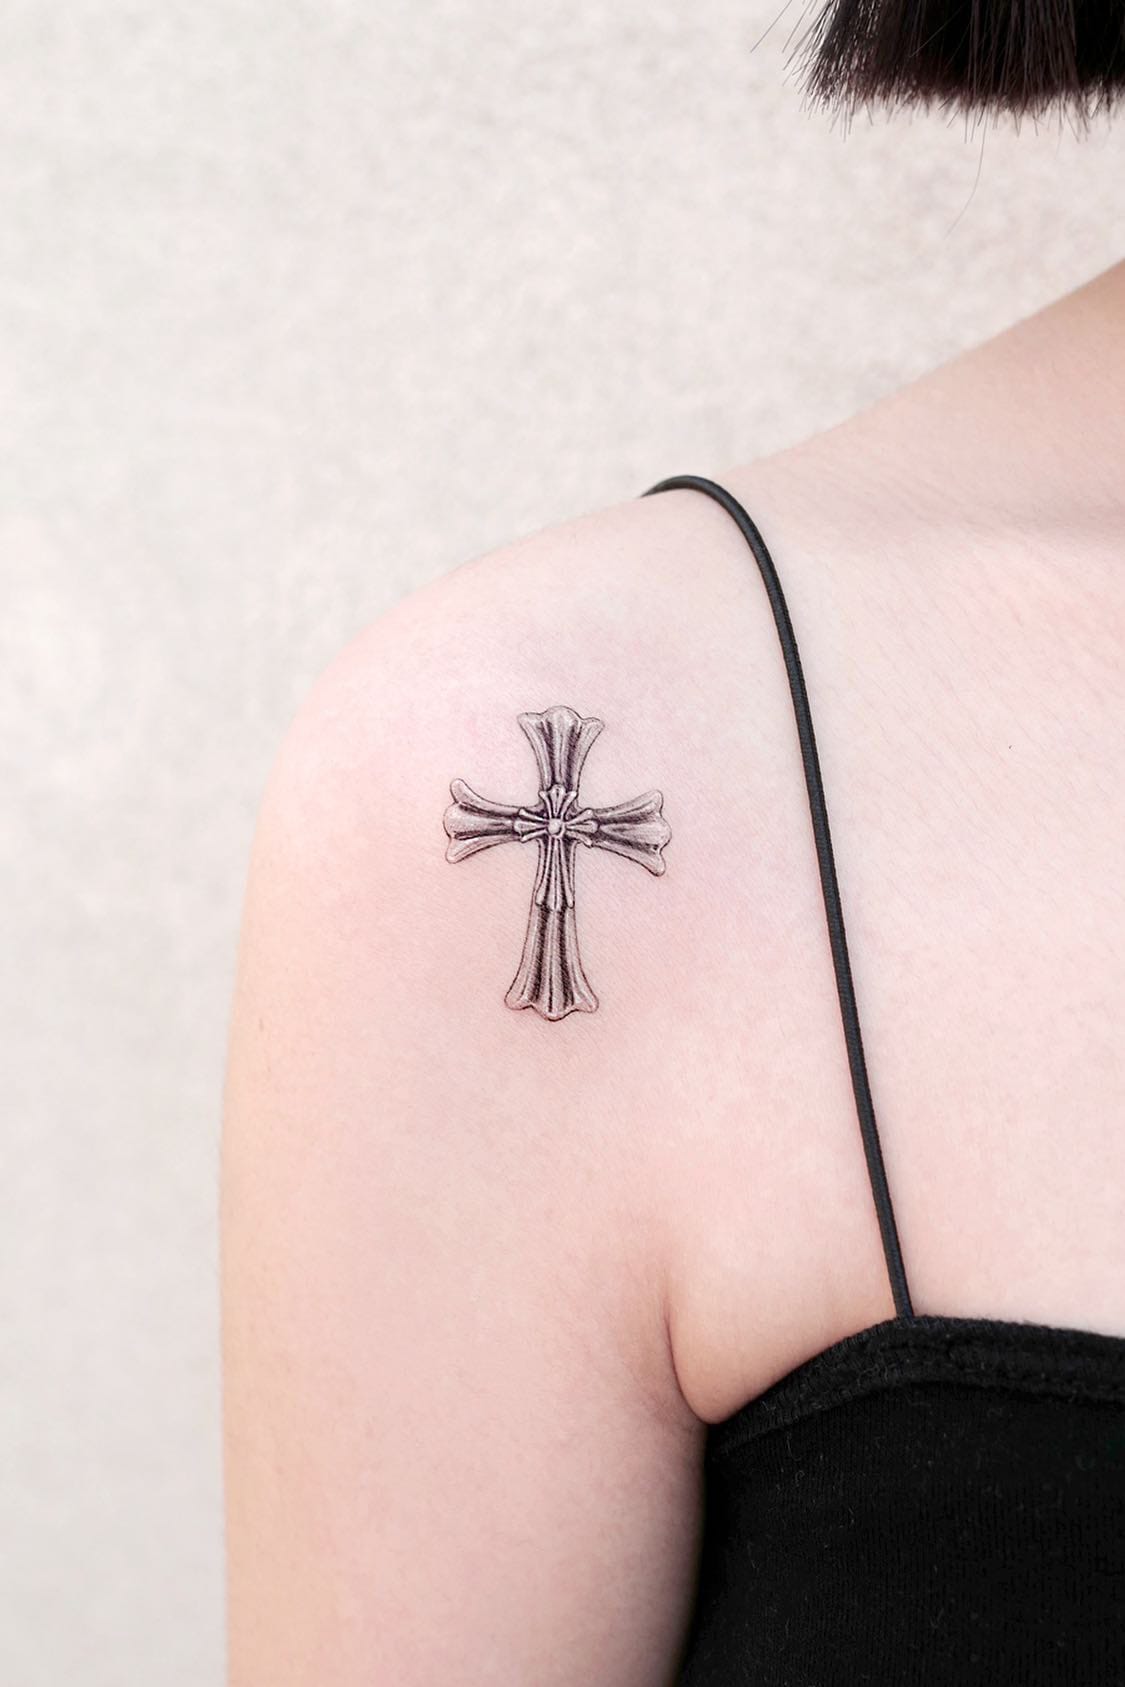 Small cross tattoo on shoulder